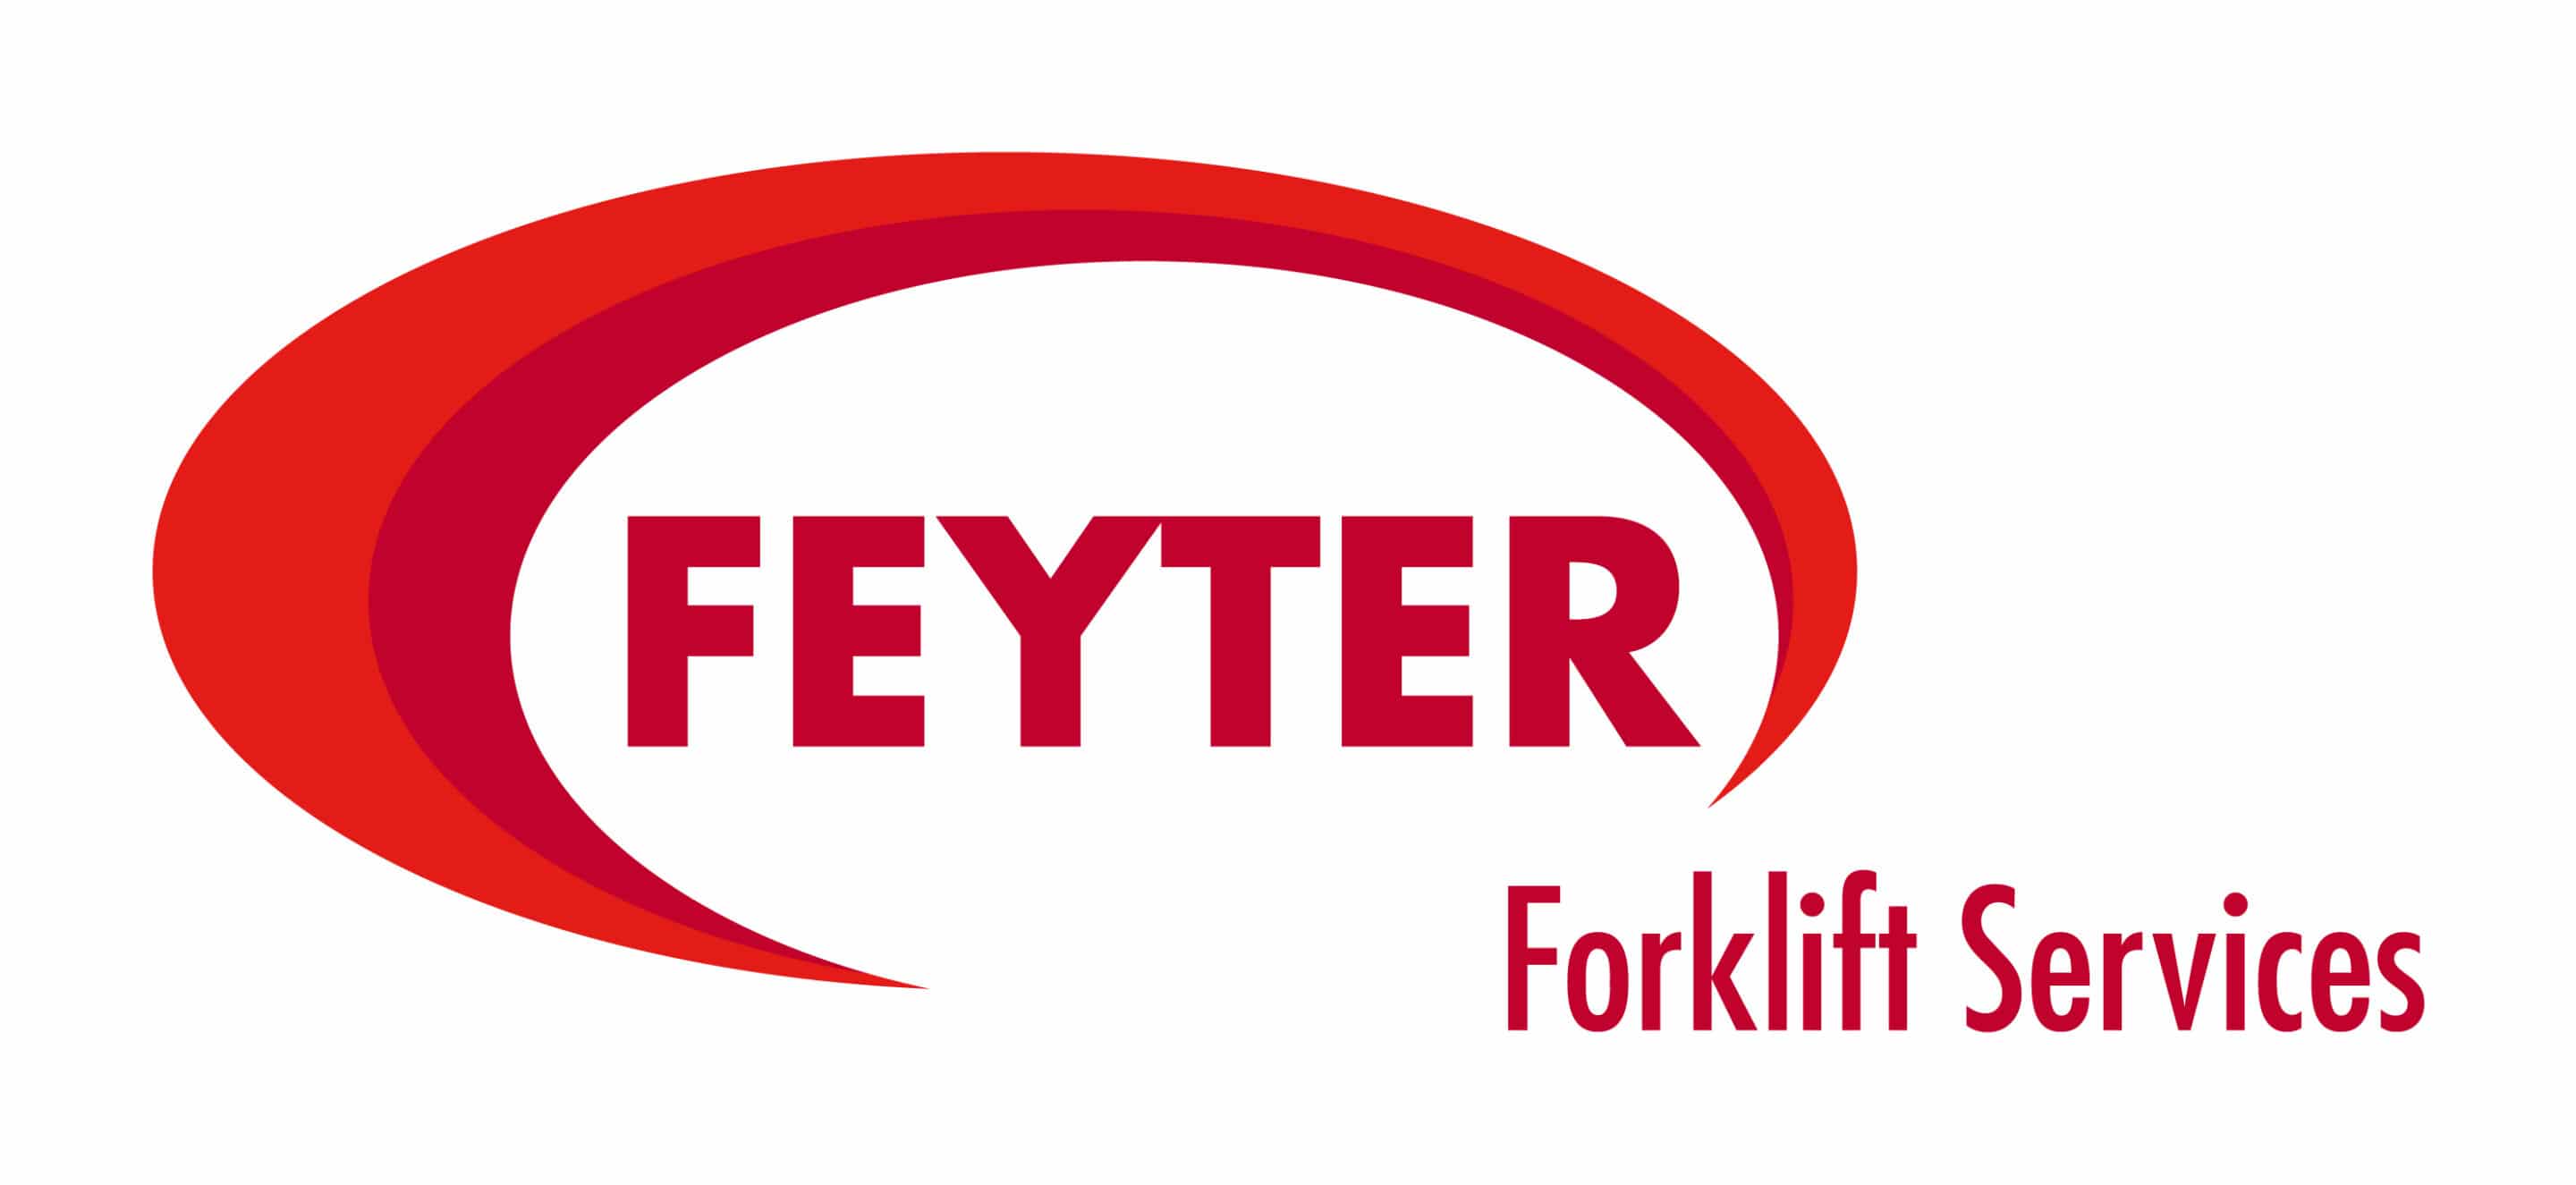 Feyter Group